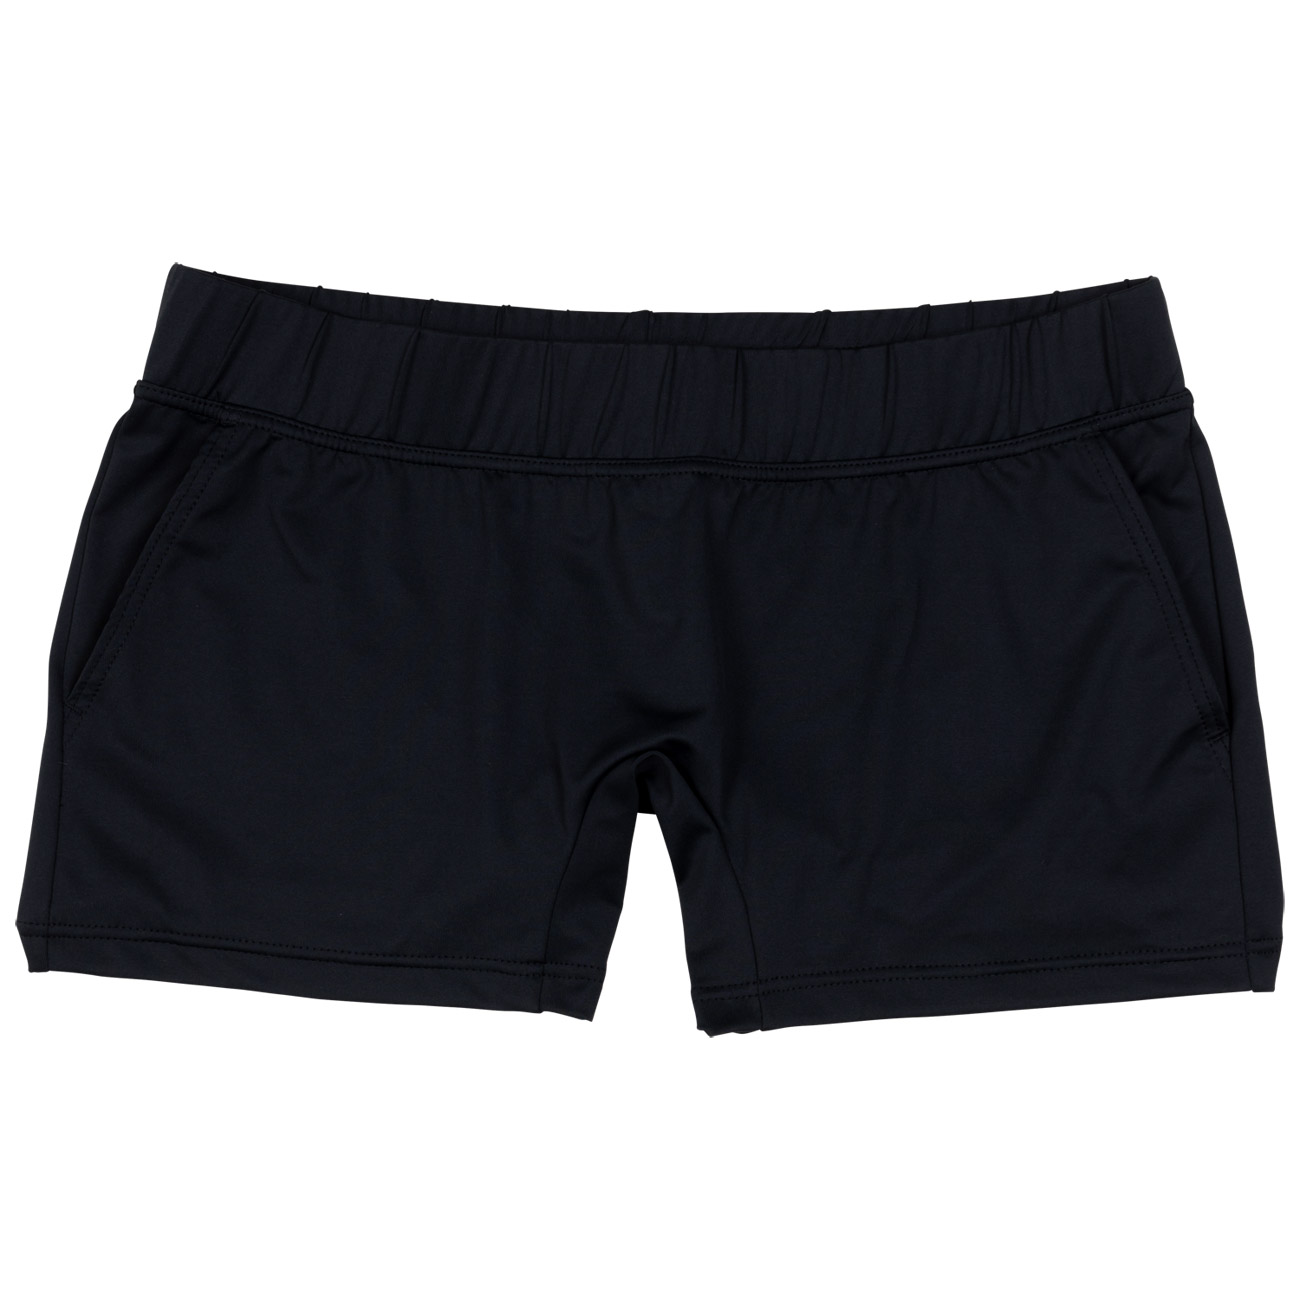 All Athletics Shorts | Men's Underwear brand TOOT official website